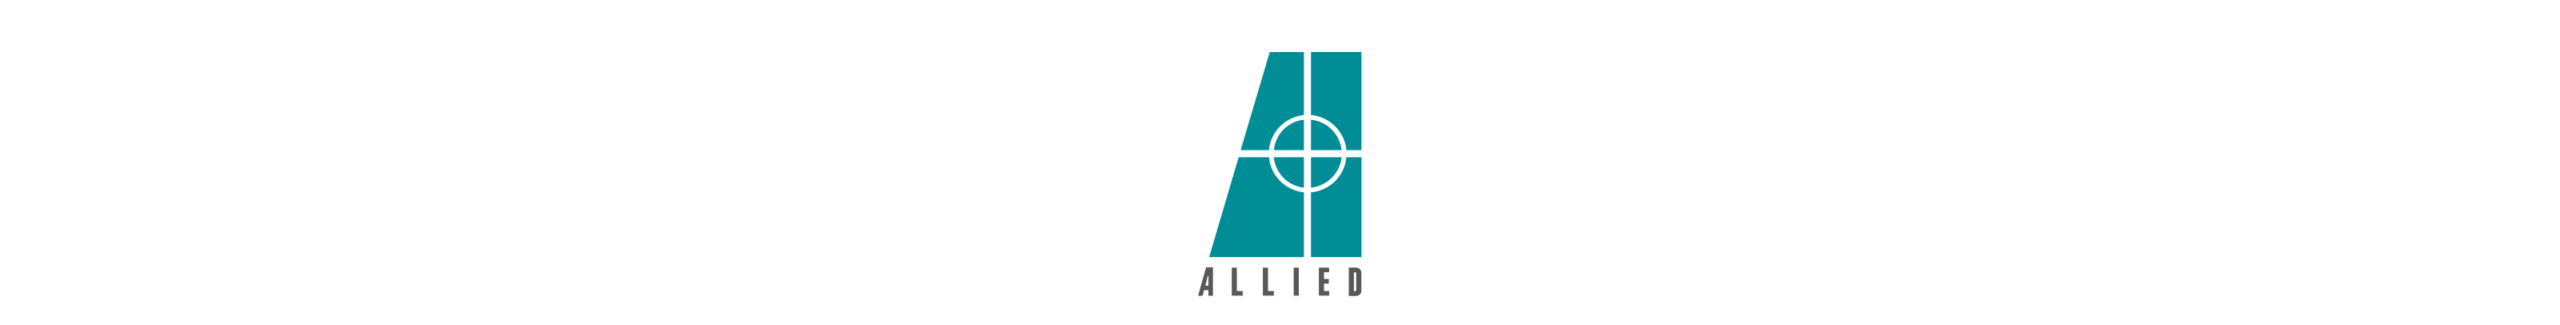 Allied Printing logo